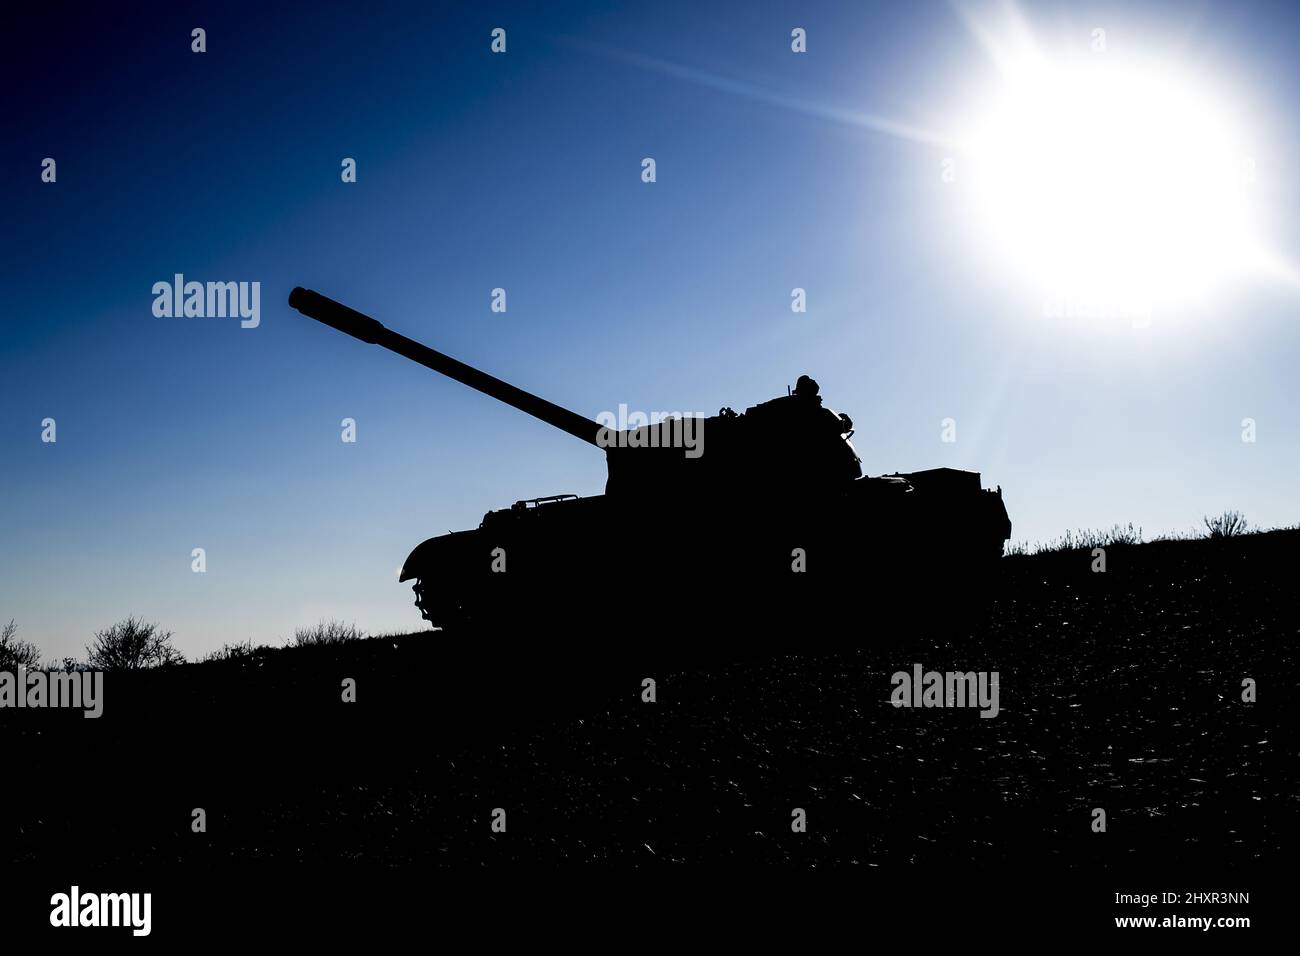 Silhouette of a main battle tank on a battlefield Stock Photo